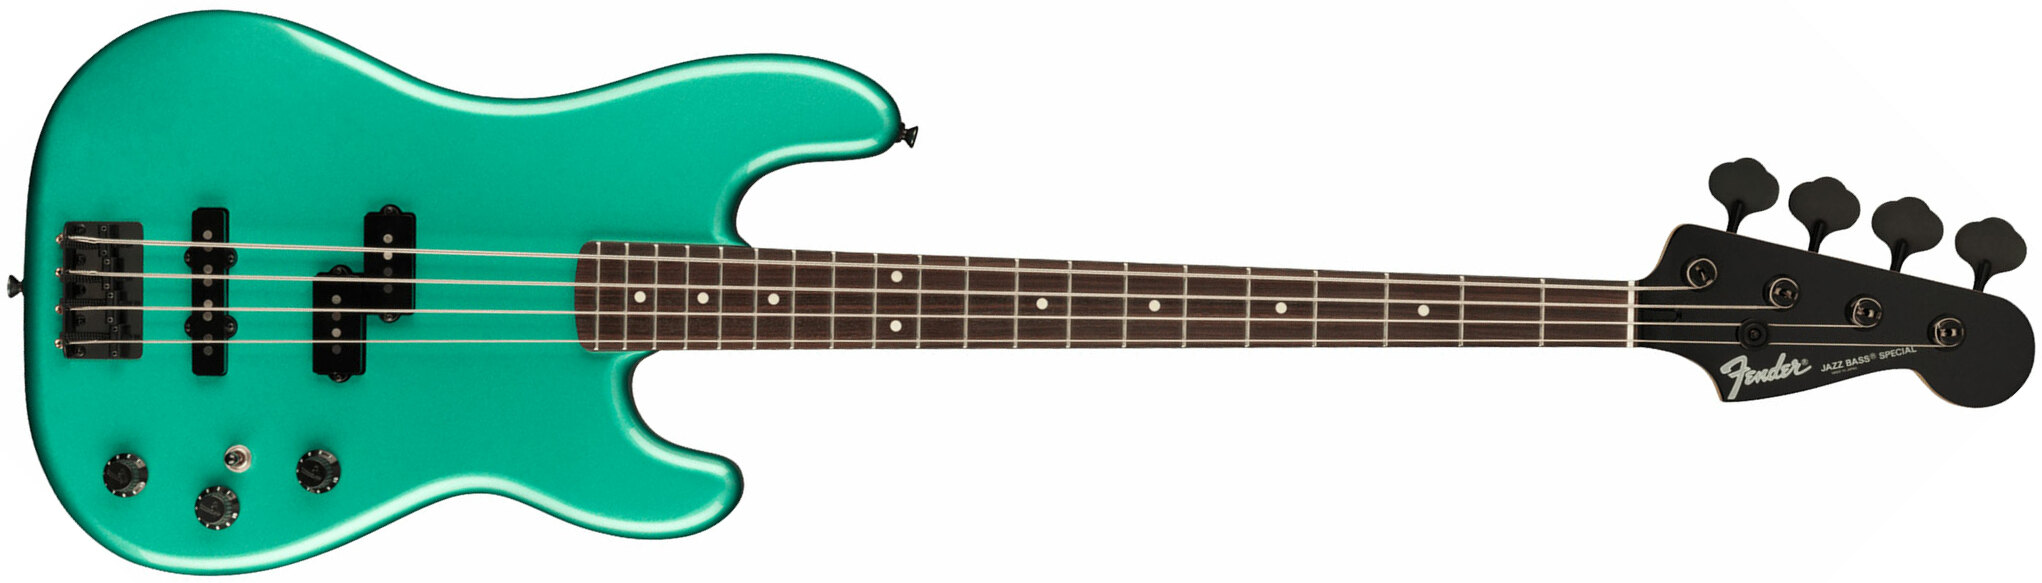 Fender Precision Bass Pj Boxer Jap Rw - Sherwood Green Metallic - Bajo eléctrico de cuerpo sólido - Main picture